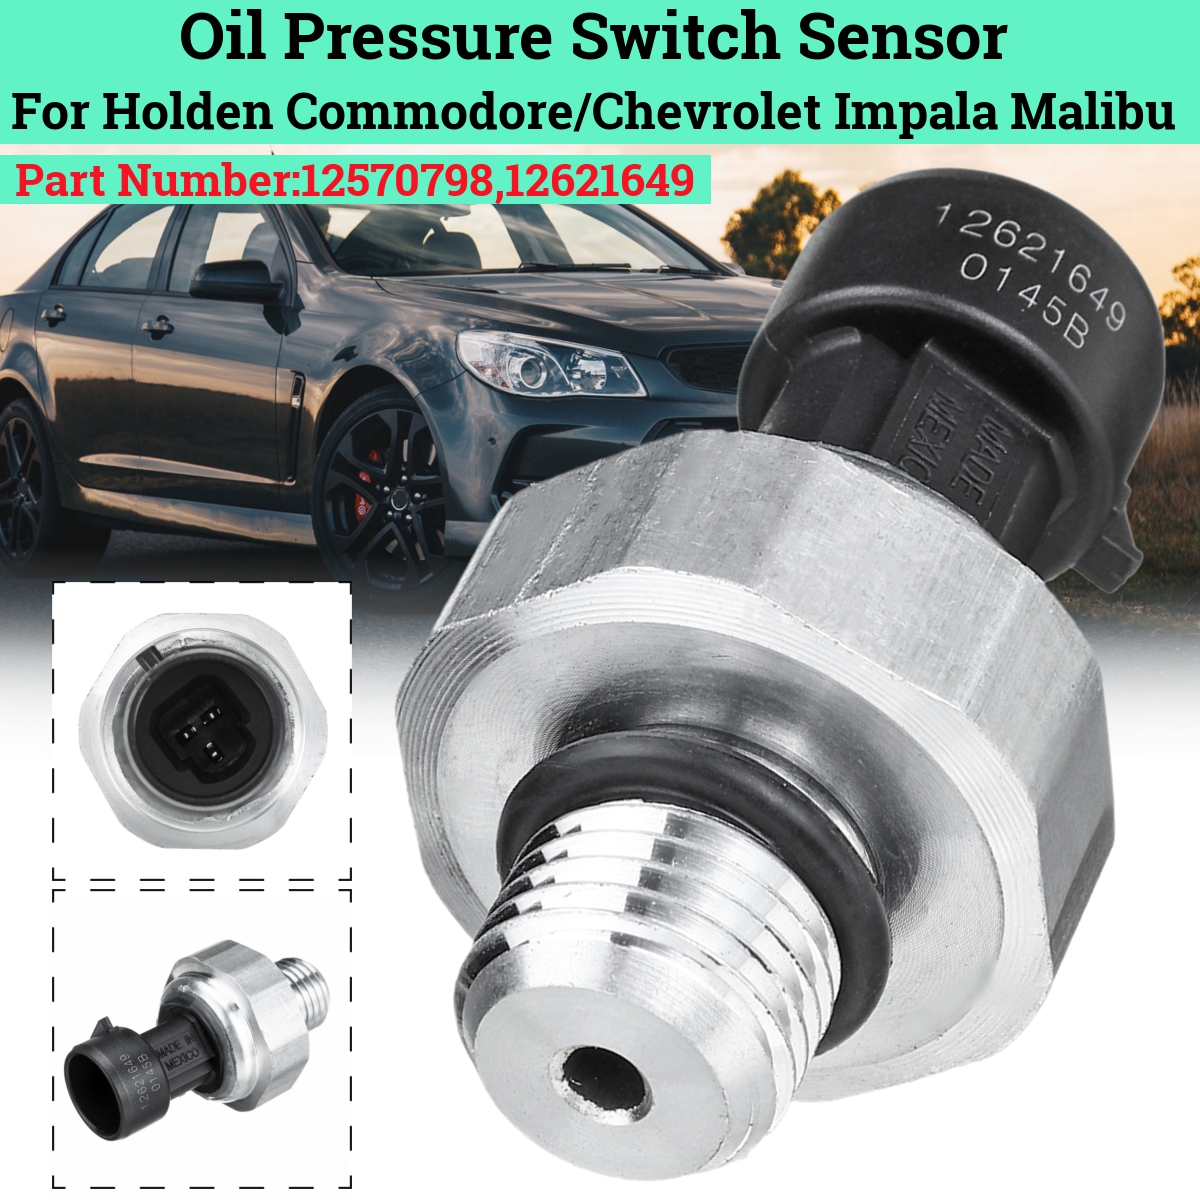 Oil-Pressure-Switch-Sensor-For-Holden-CommodoreChevrolet-Impala-Malibu-1671377-2